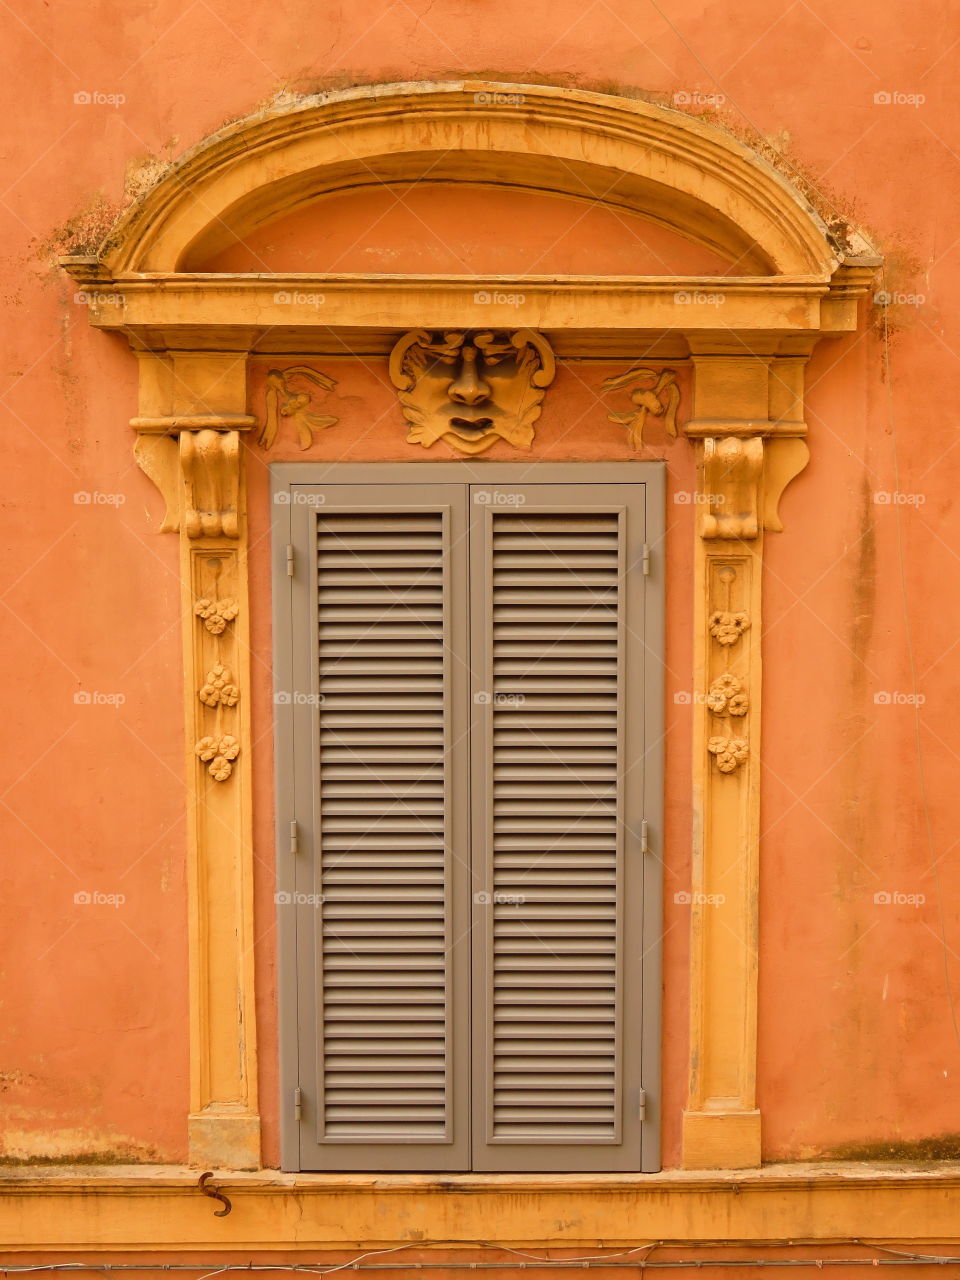 View of a entrance door